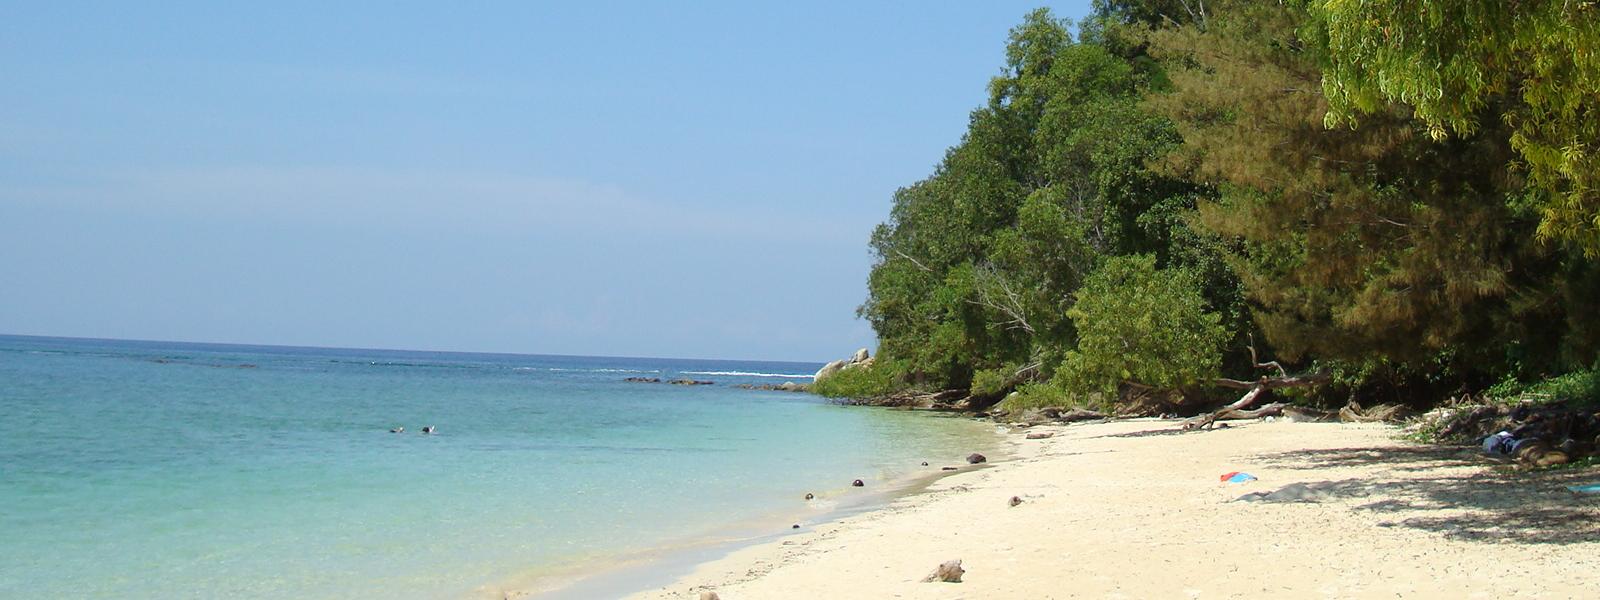 Kota Kinabalu beach